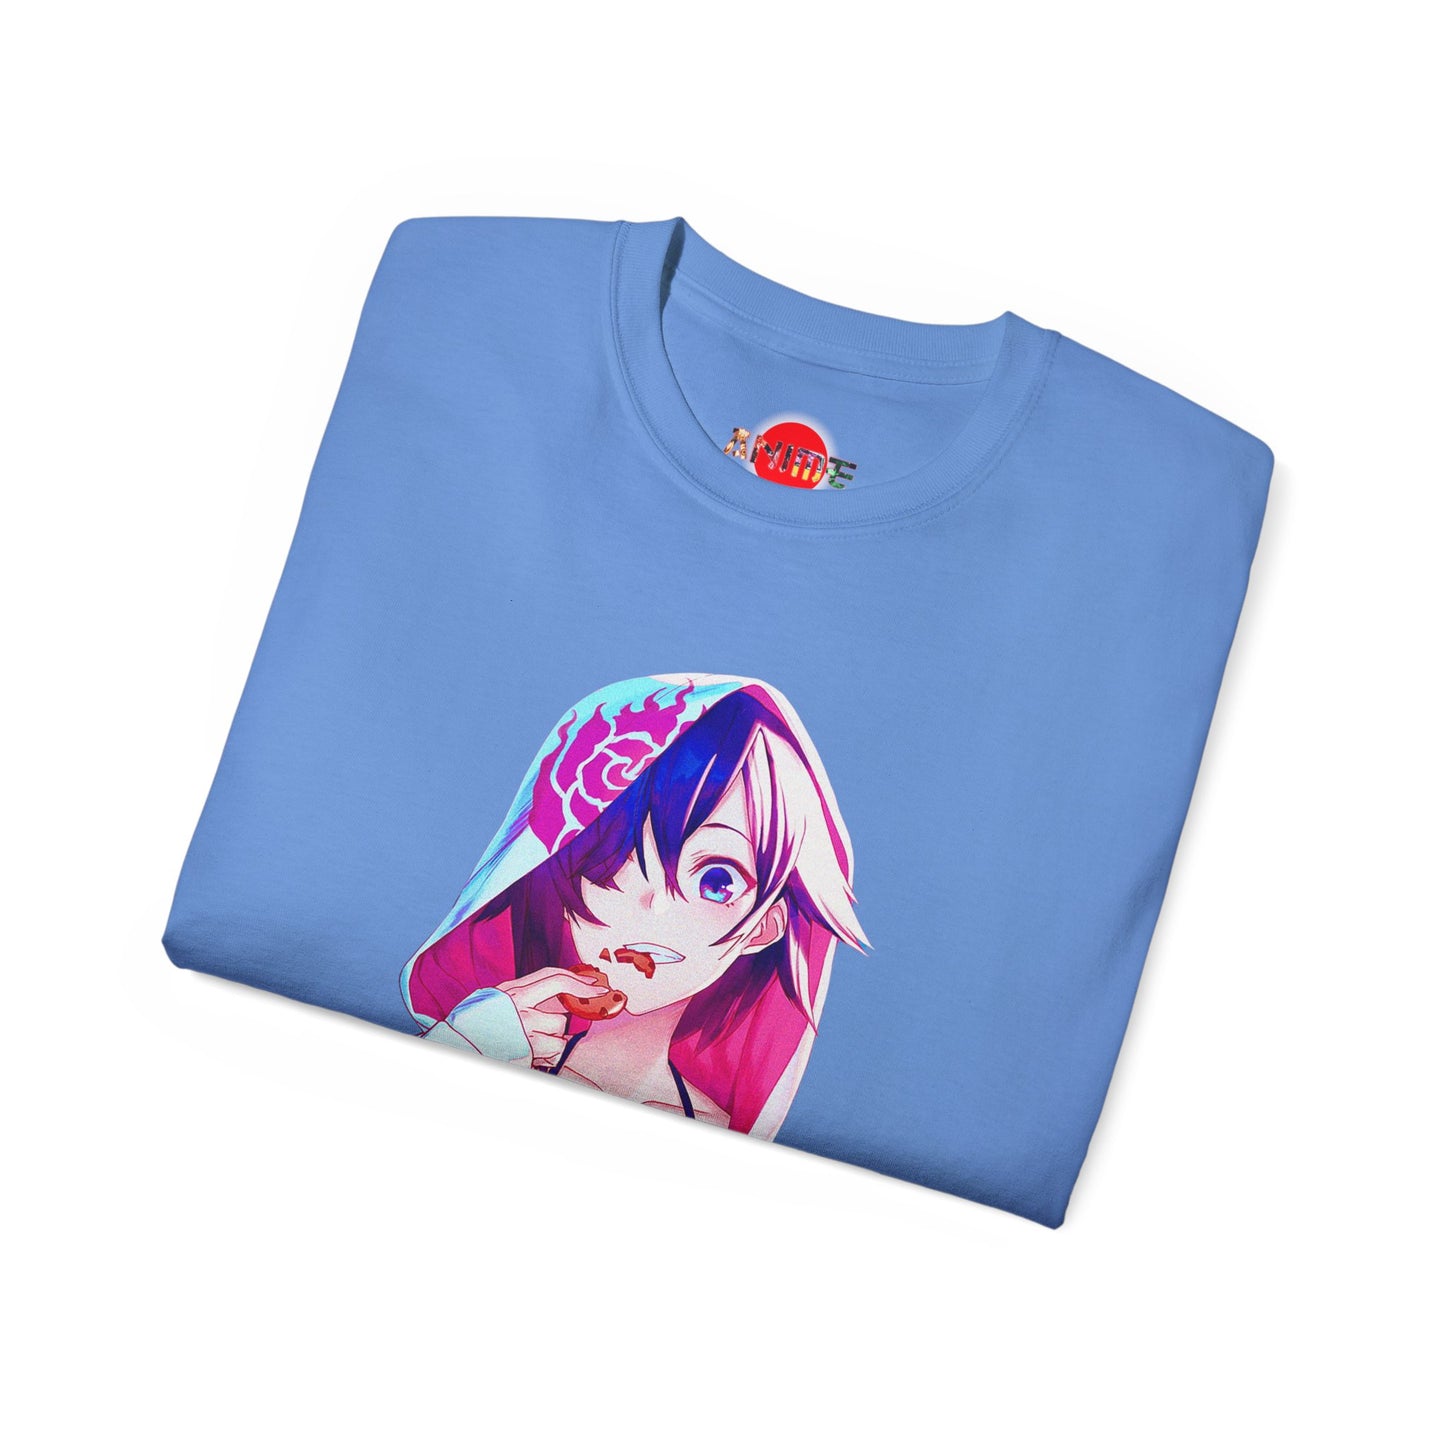 New Anime Style T-shirt Unisex Ultra Cotton Tee